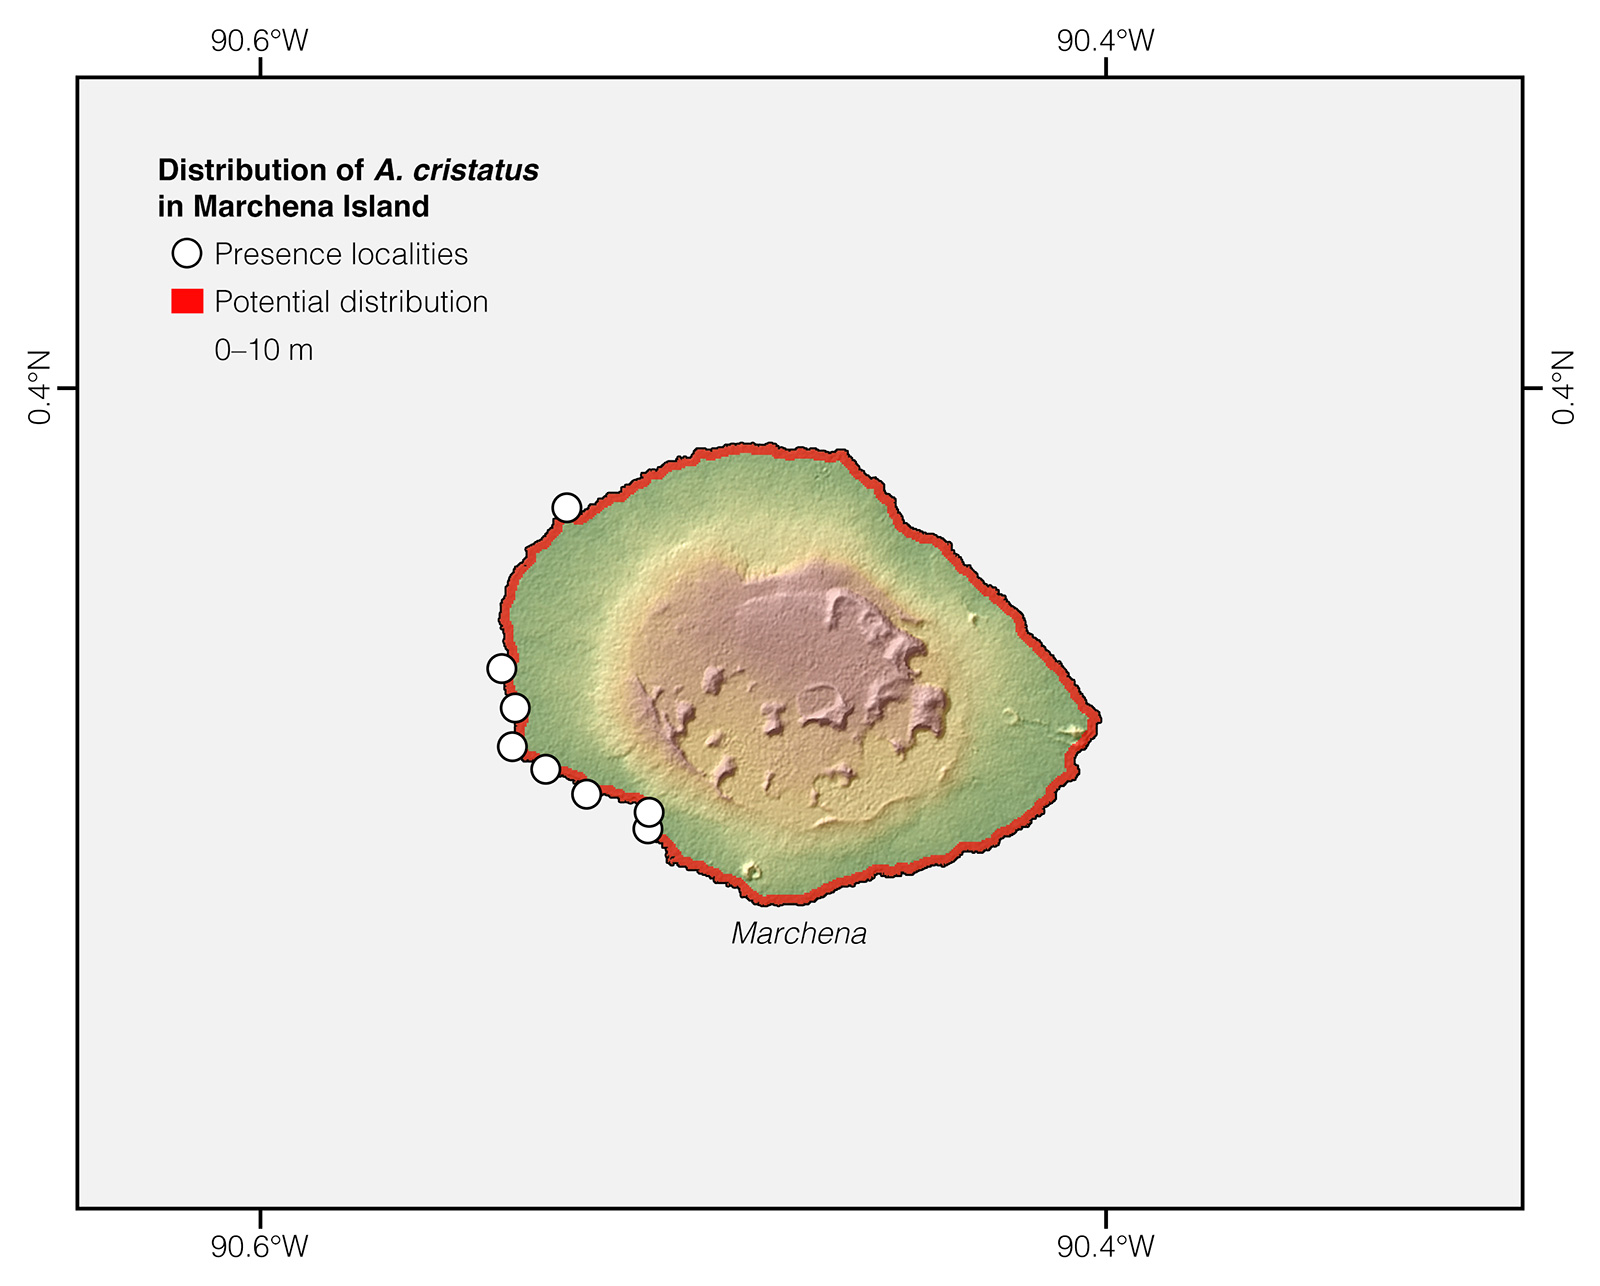 Distribution of Amblyrhynchus cristatus in Marchena Island